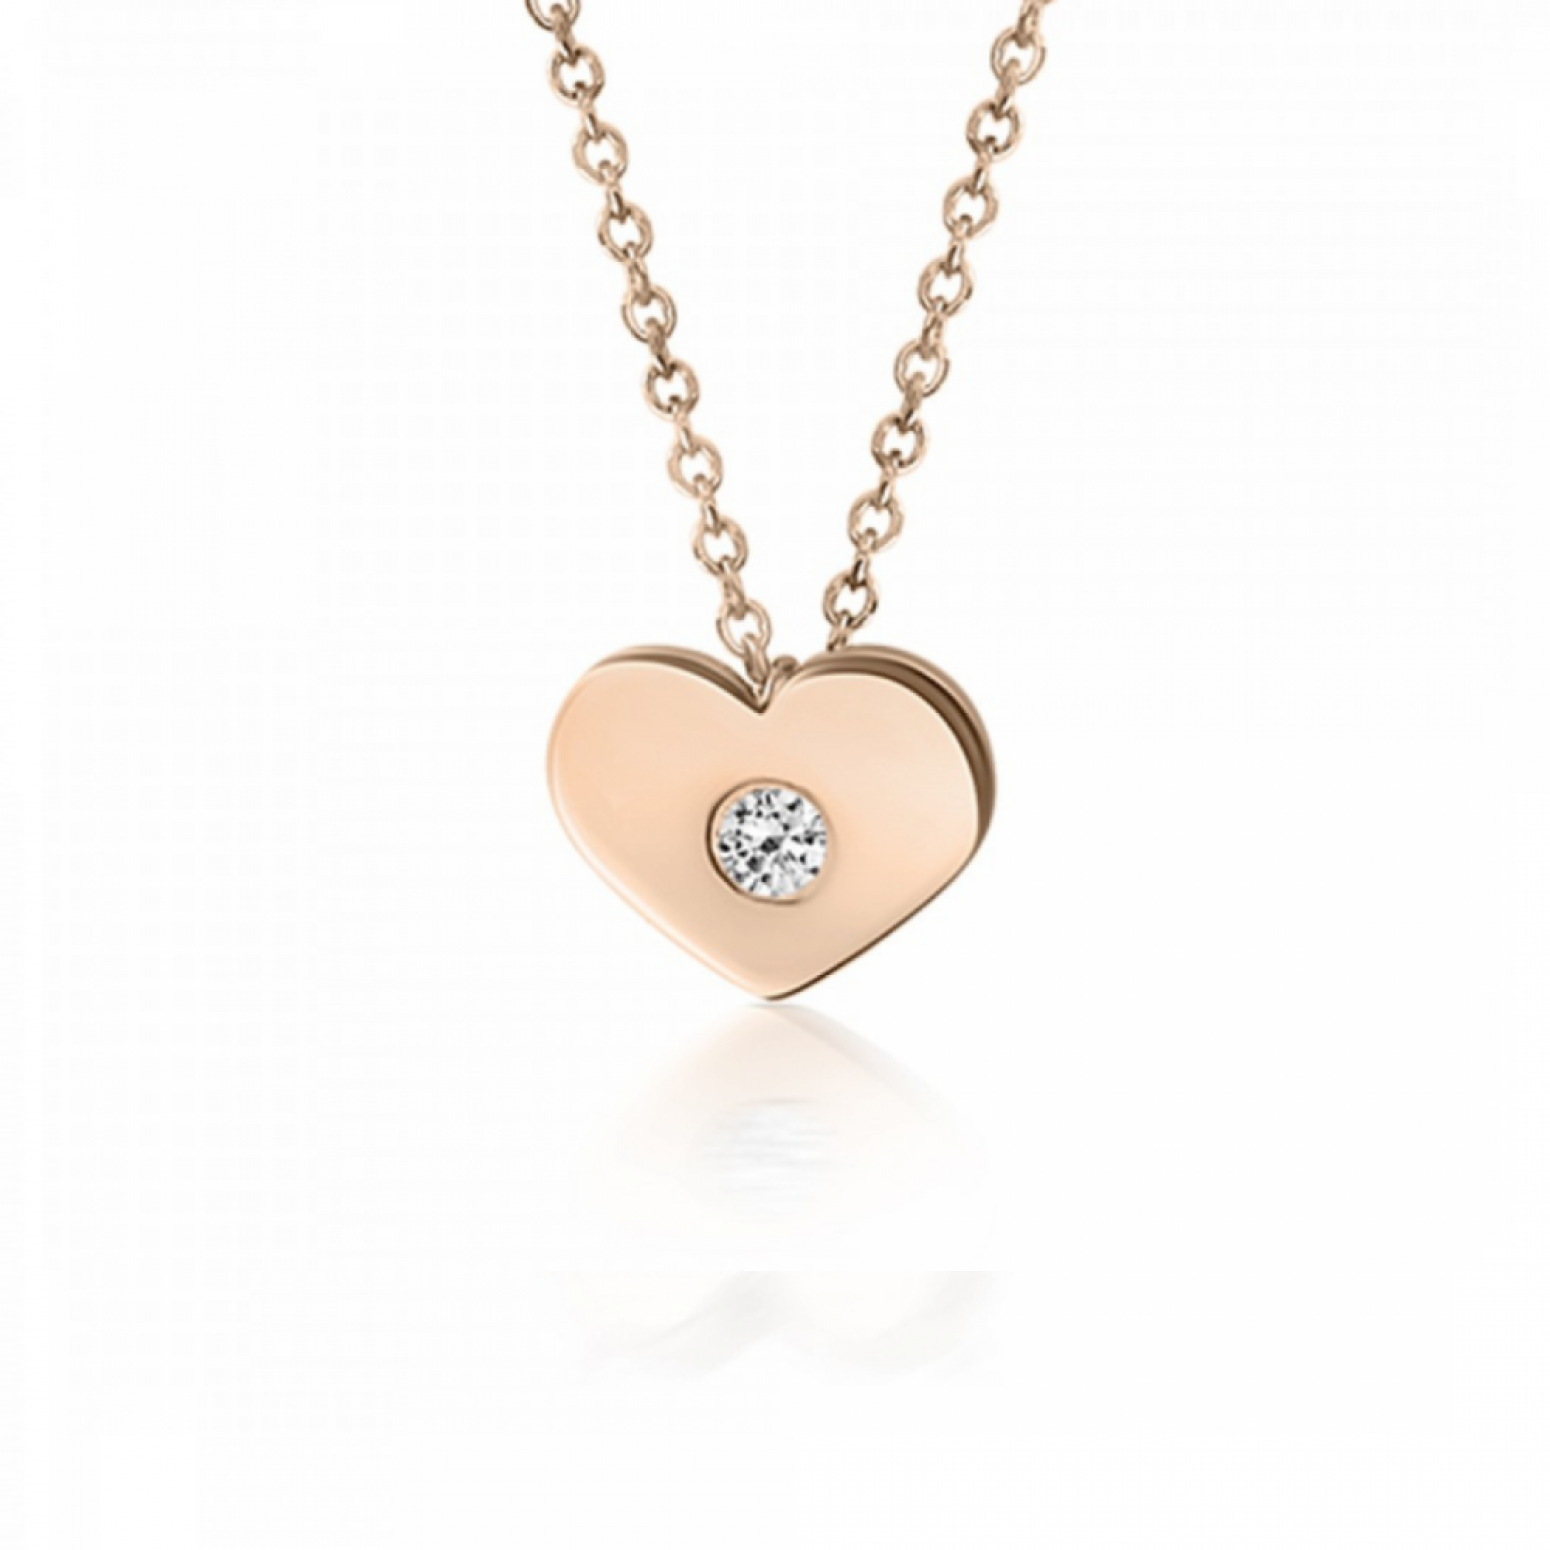 Heart necklace, Κ14 pink gold with diamond 0.02ct, VS2, H pk0186 NECKLACES Κοσμηματα - chrilia.gr